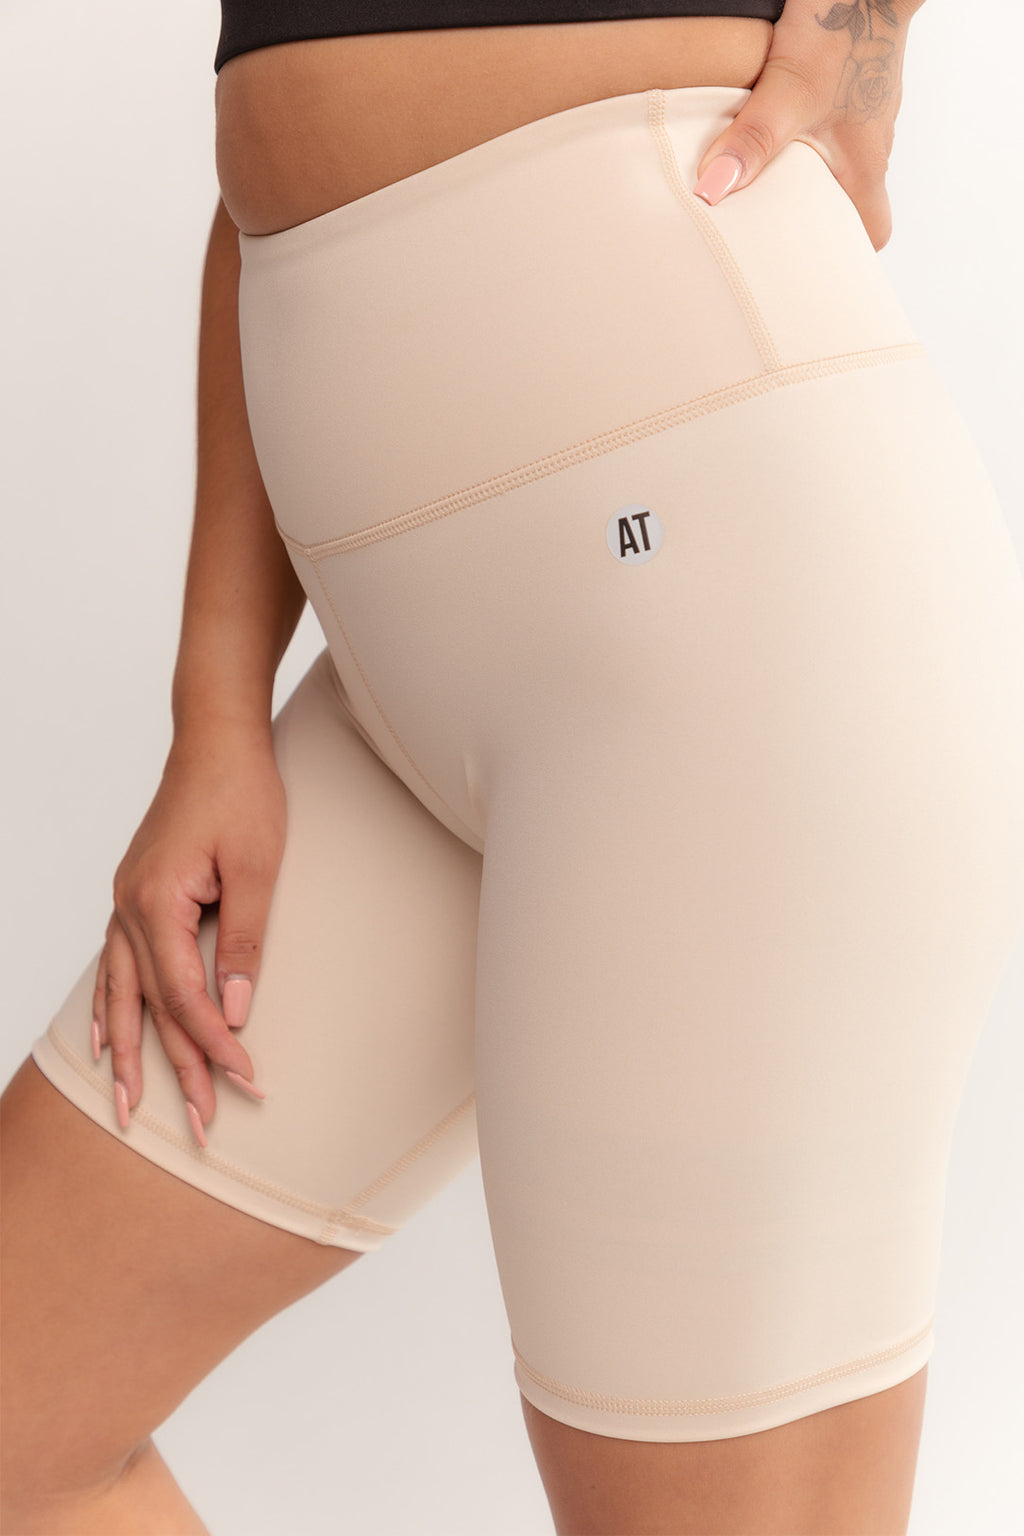 mid-thigh-under-uniform-compression-short-tight-beige-small-side
